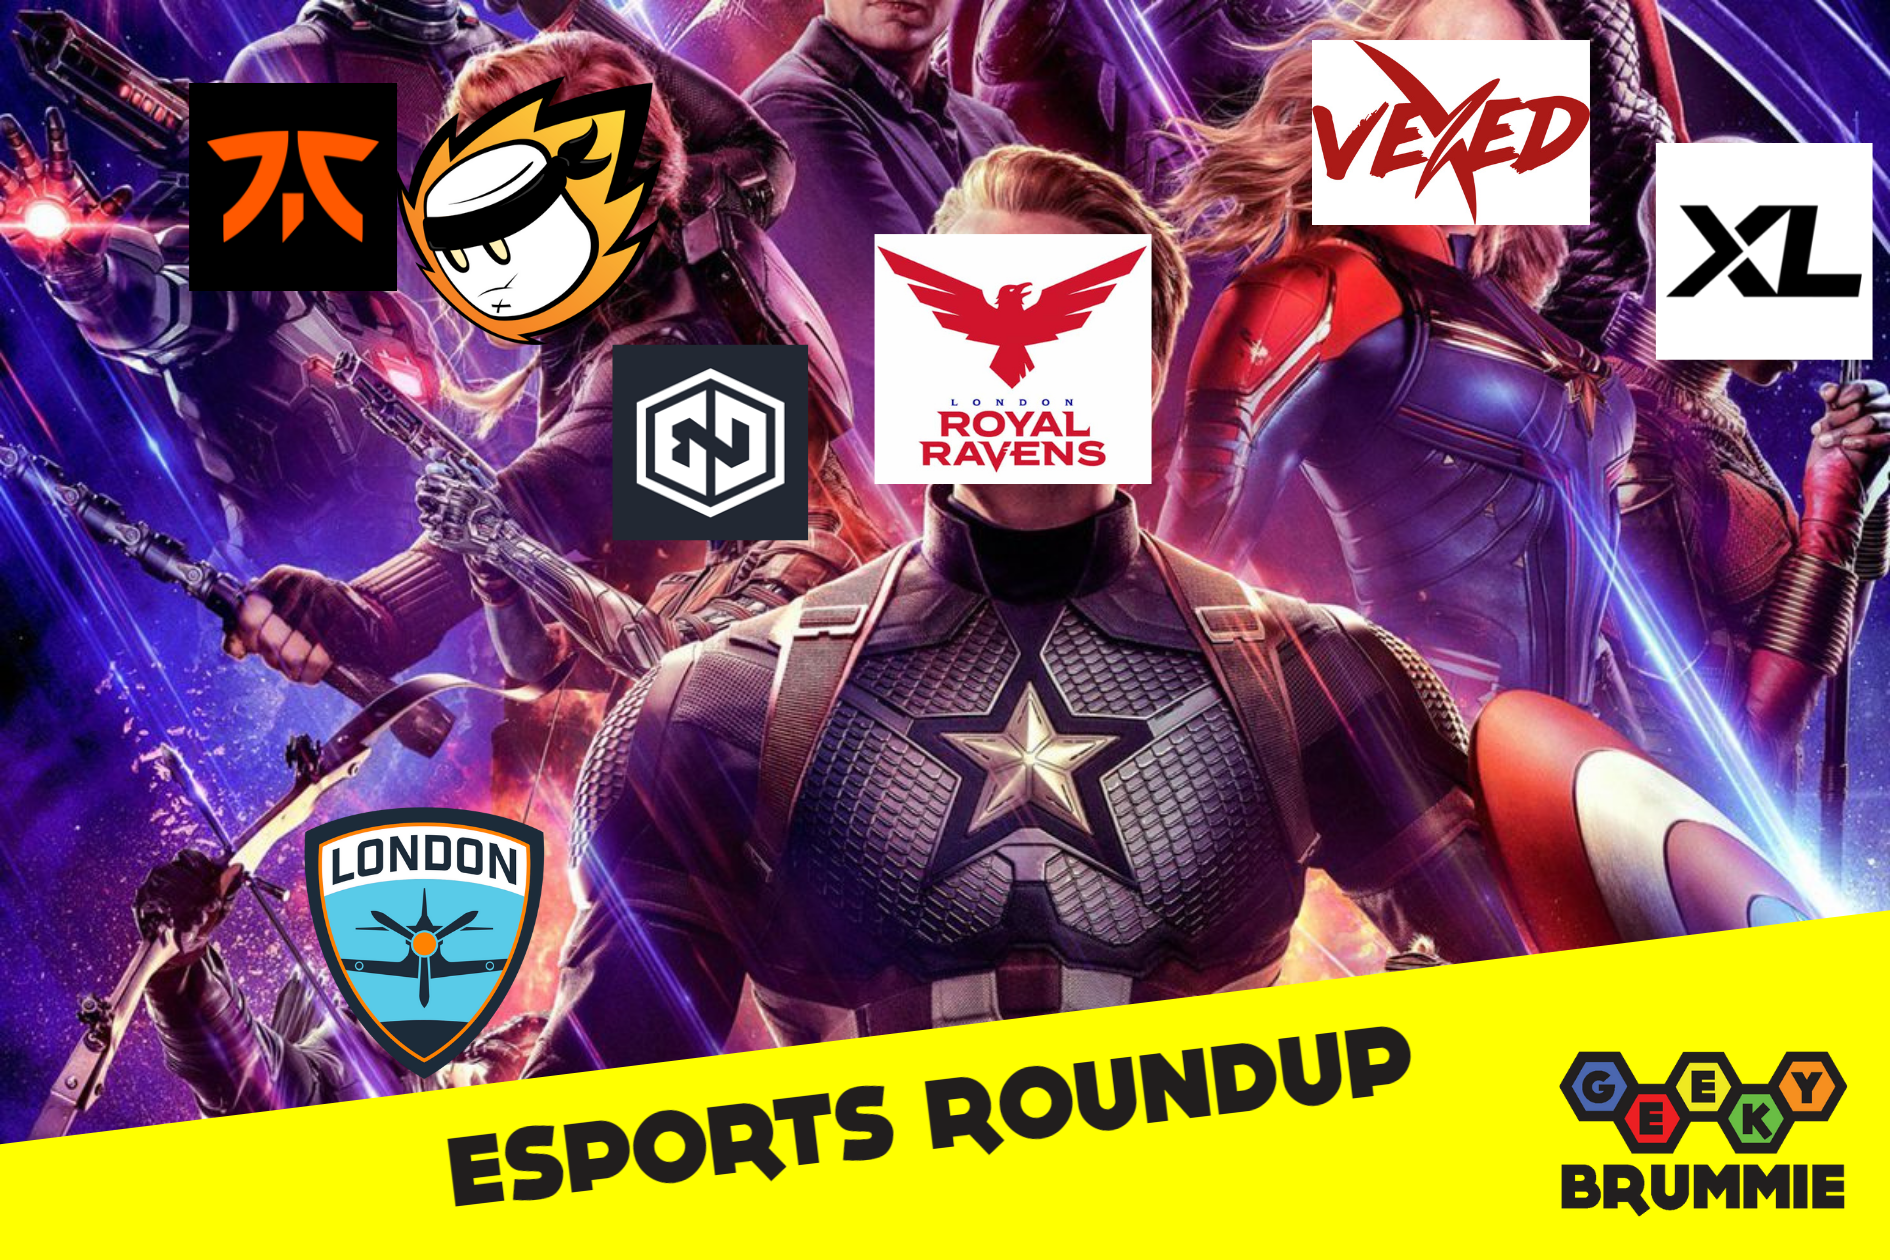 Esports Roundup – Esports Avengers Assemble!